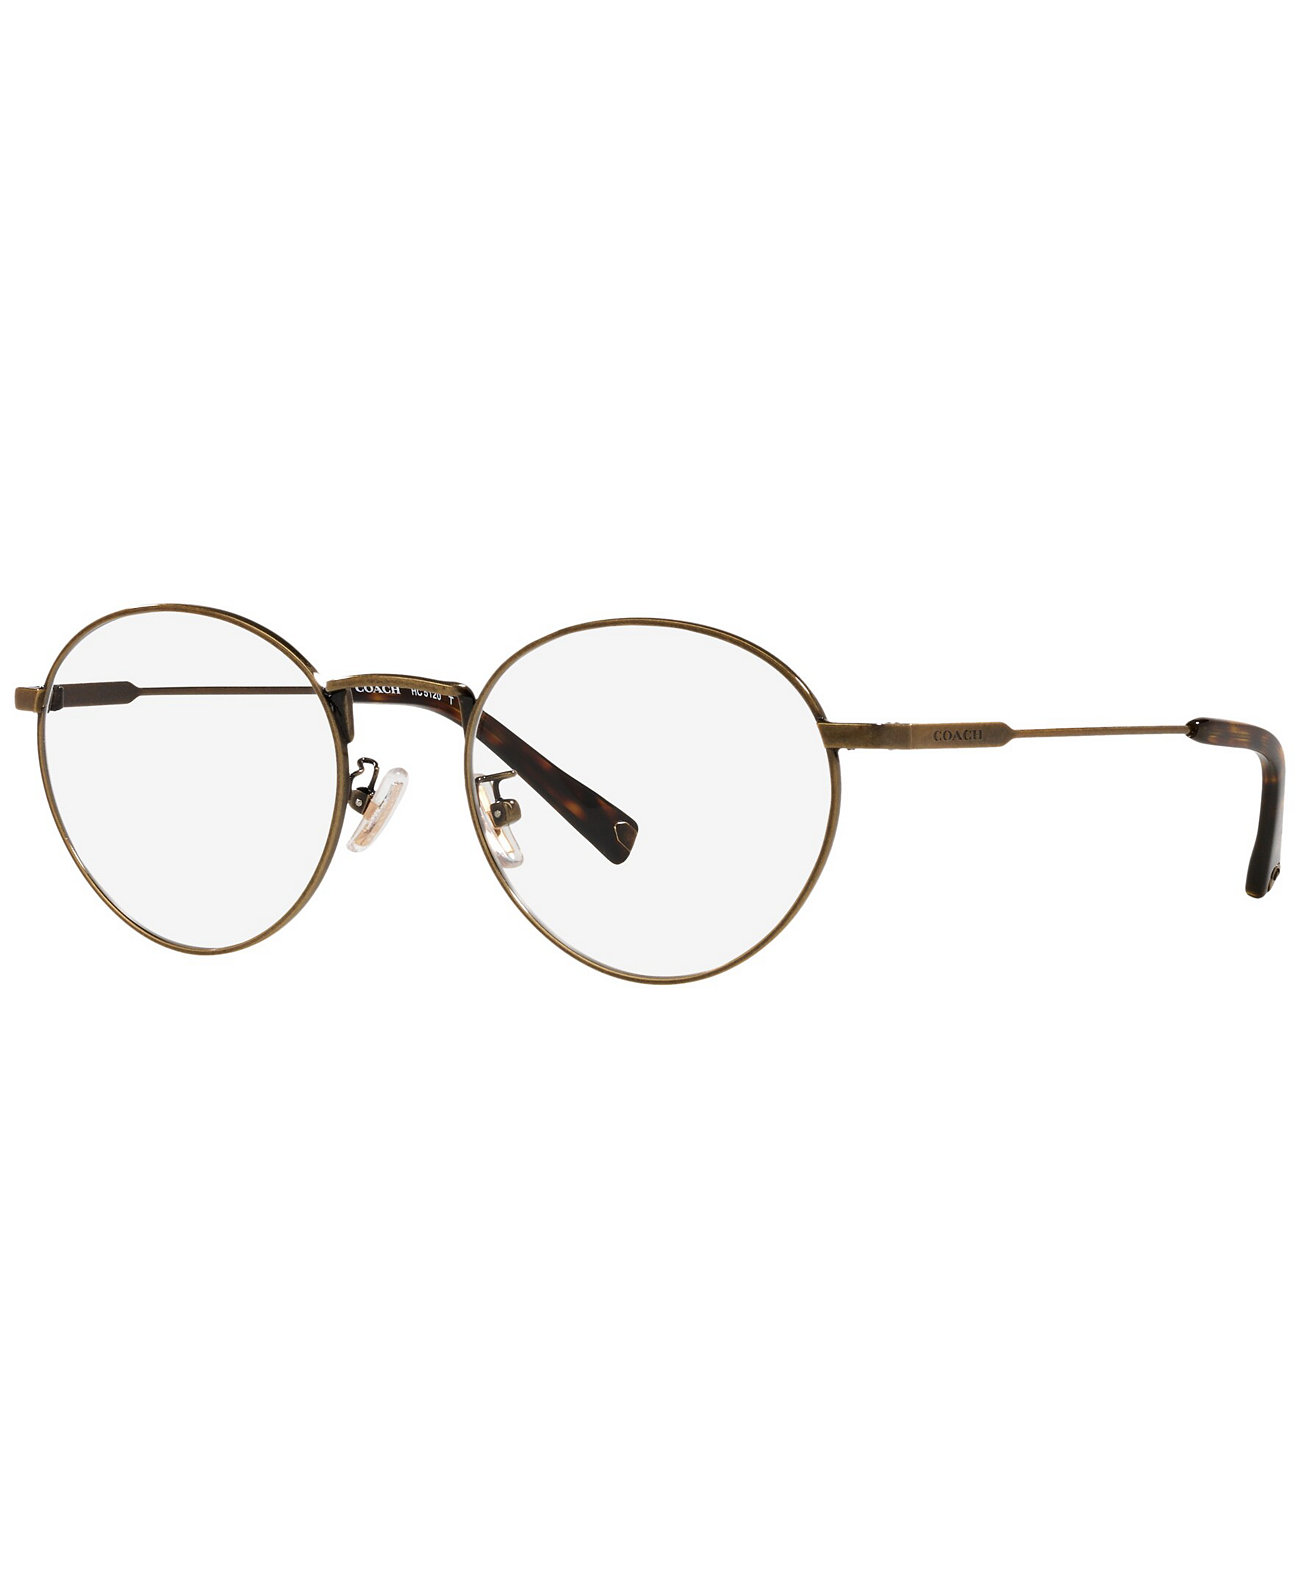 Men's C2101 Eyeglasses, HC5120 COACH